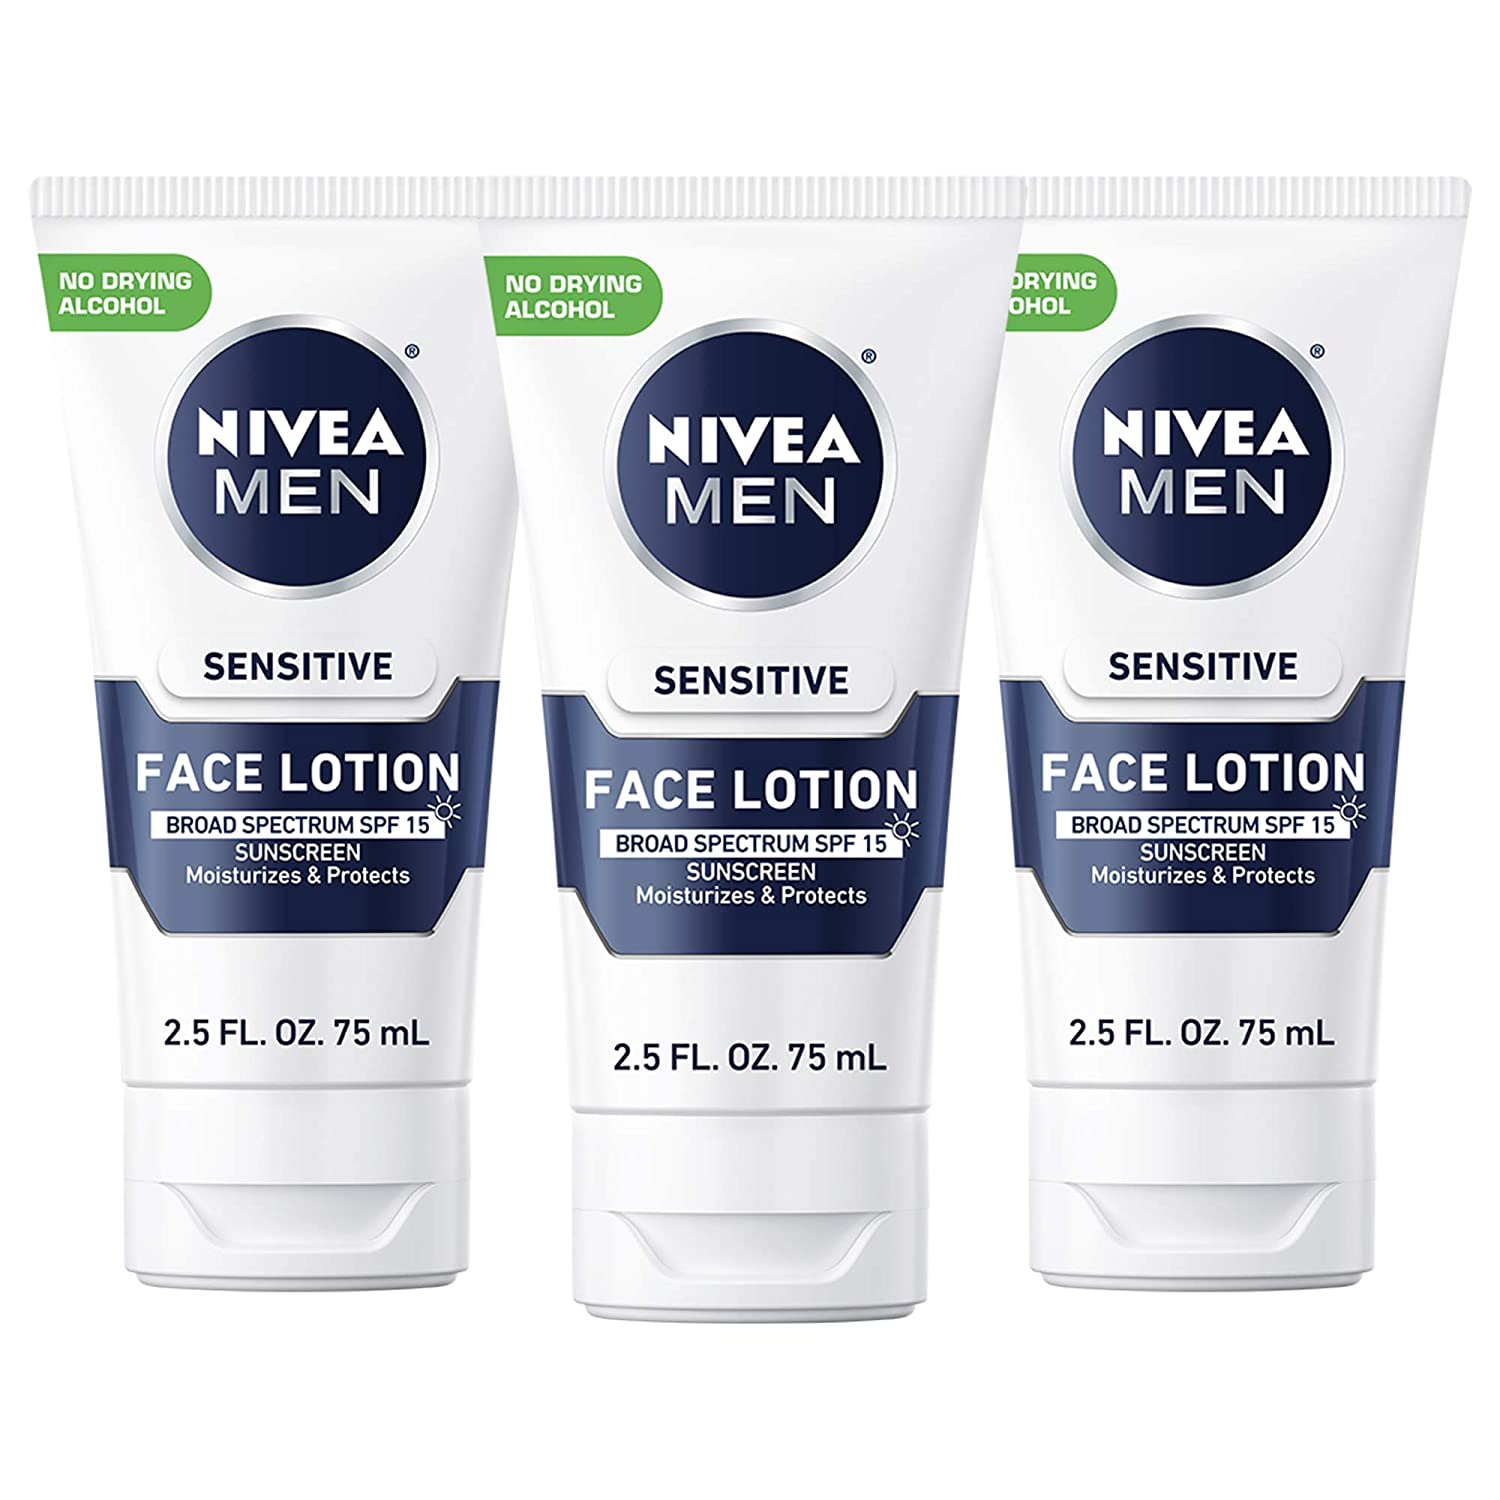 NIVEA Men Sensitive Protective Lotion - Moisturize With Broad Spectrum SPF 15 - 2.5 Fl Oz (Pack of 3) $9.87